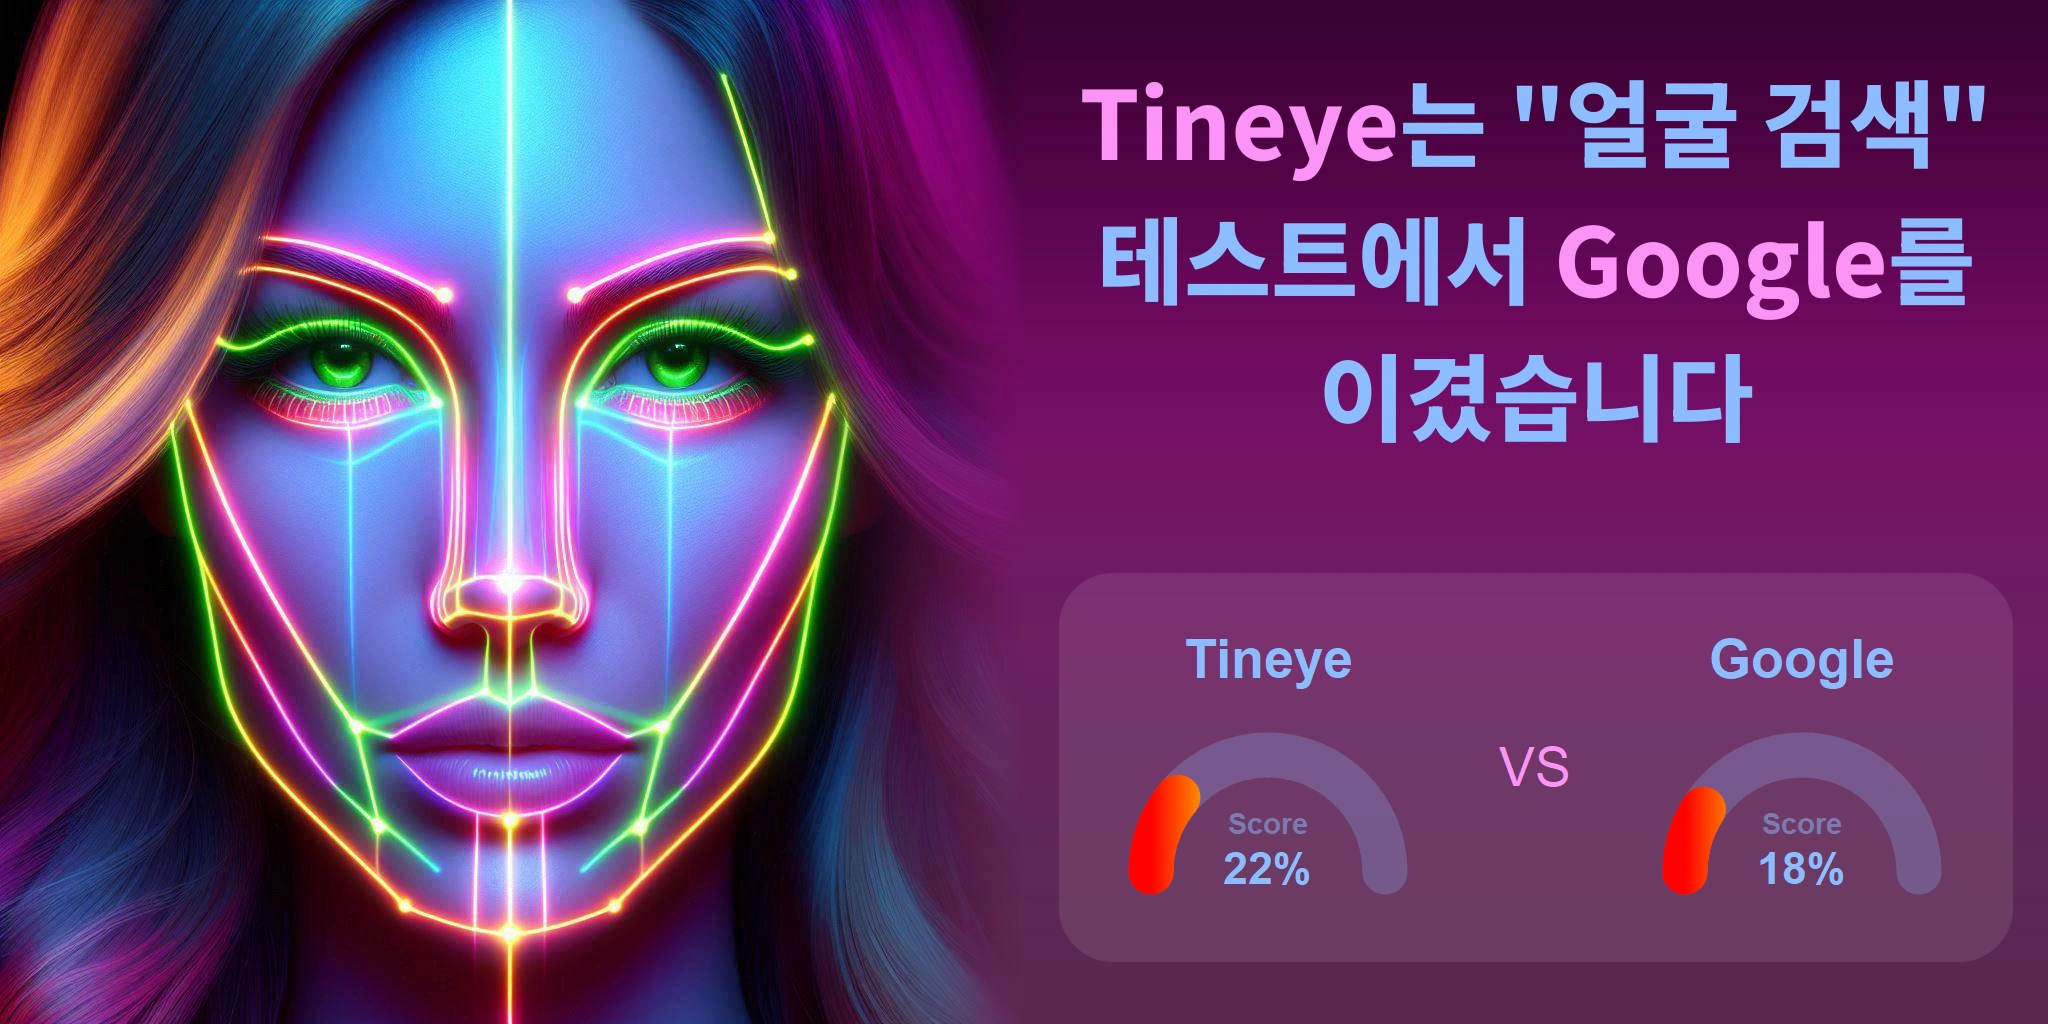 Google.com vs Tineye.com